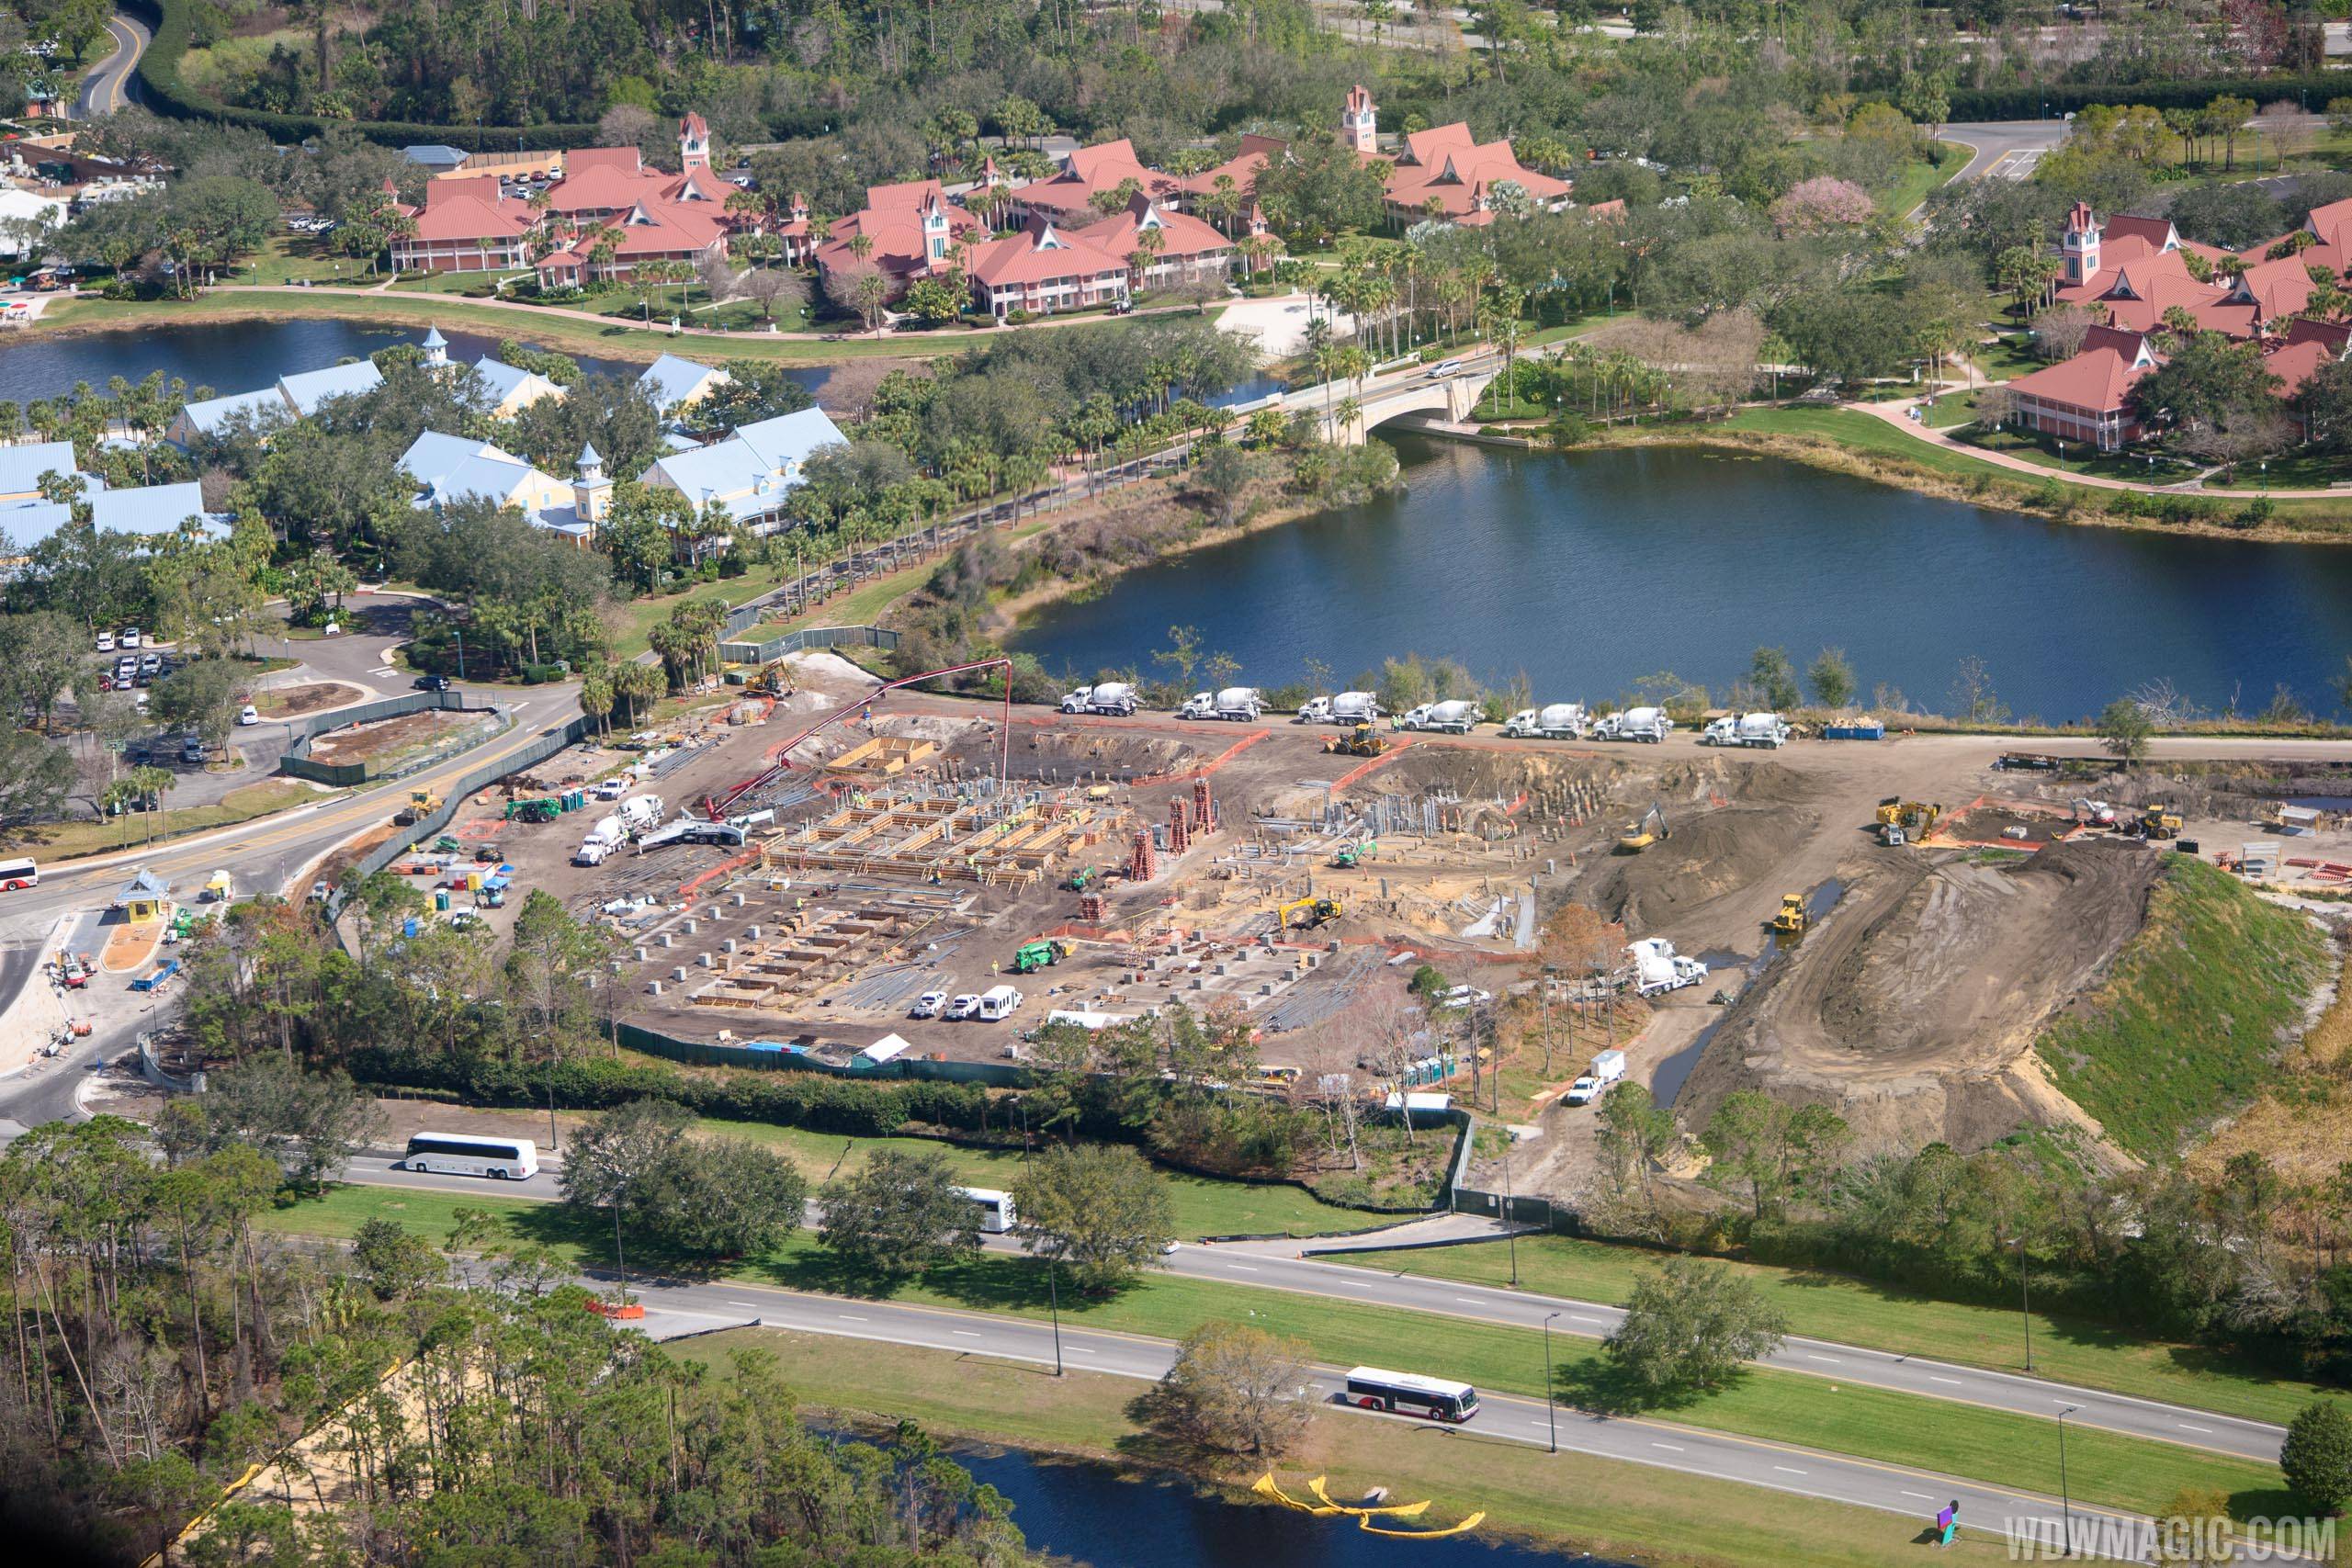 Disney Skyliner construction aerial views - February 2018